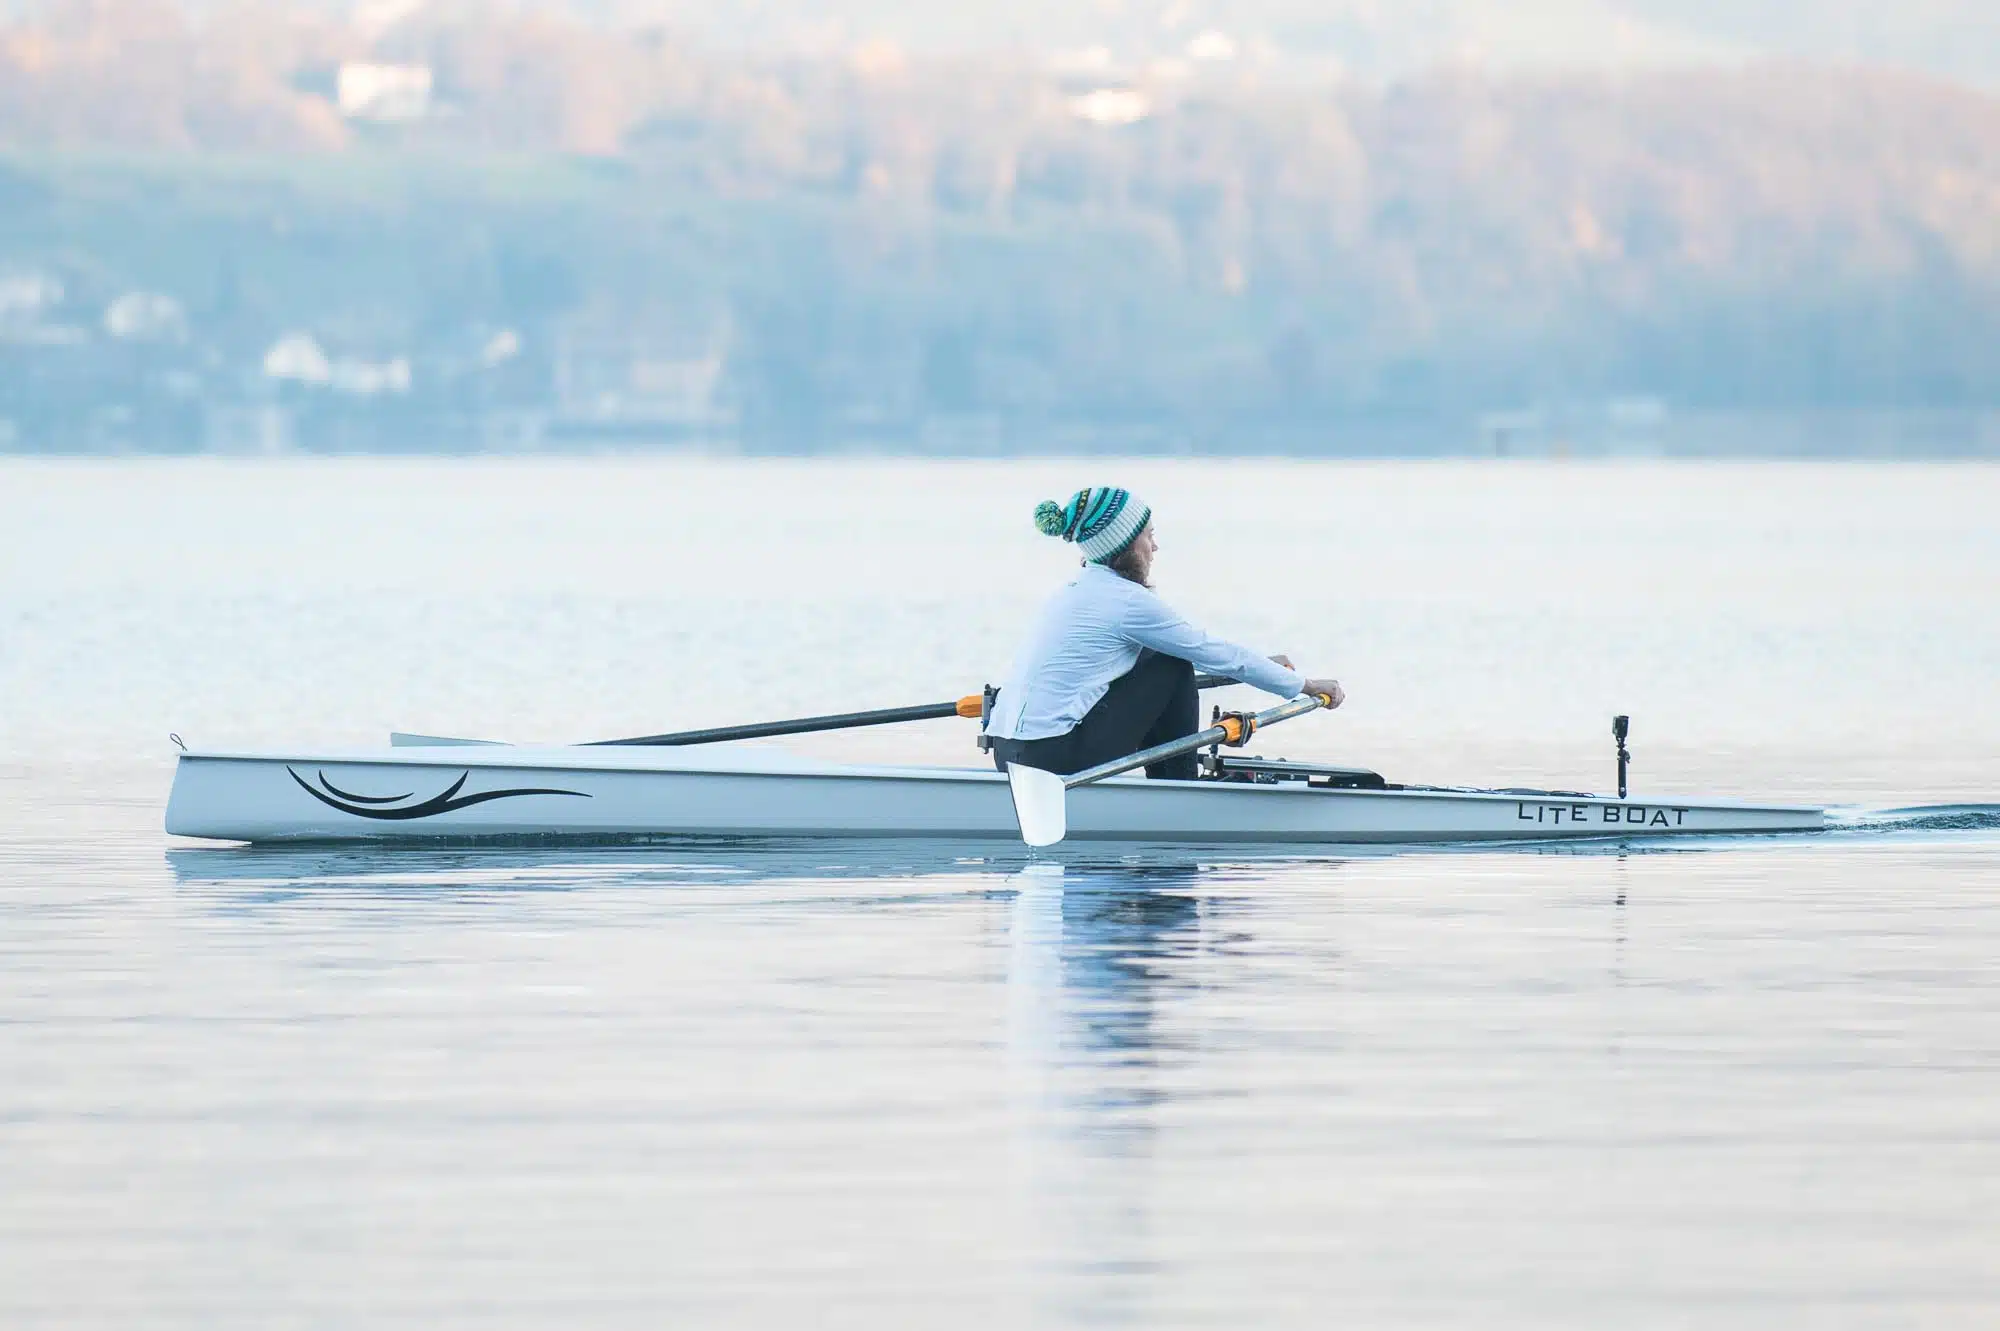 LiteSport 4.6 lightweight solo recreational rowing boat